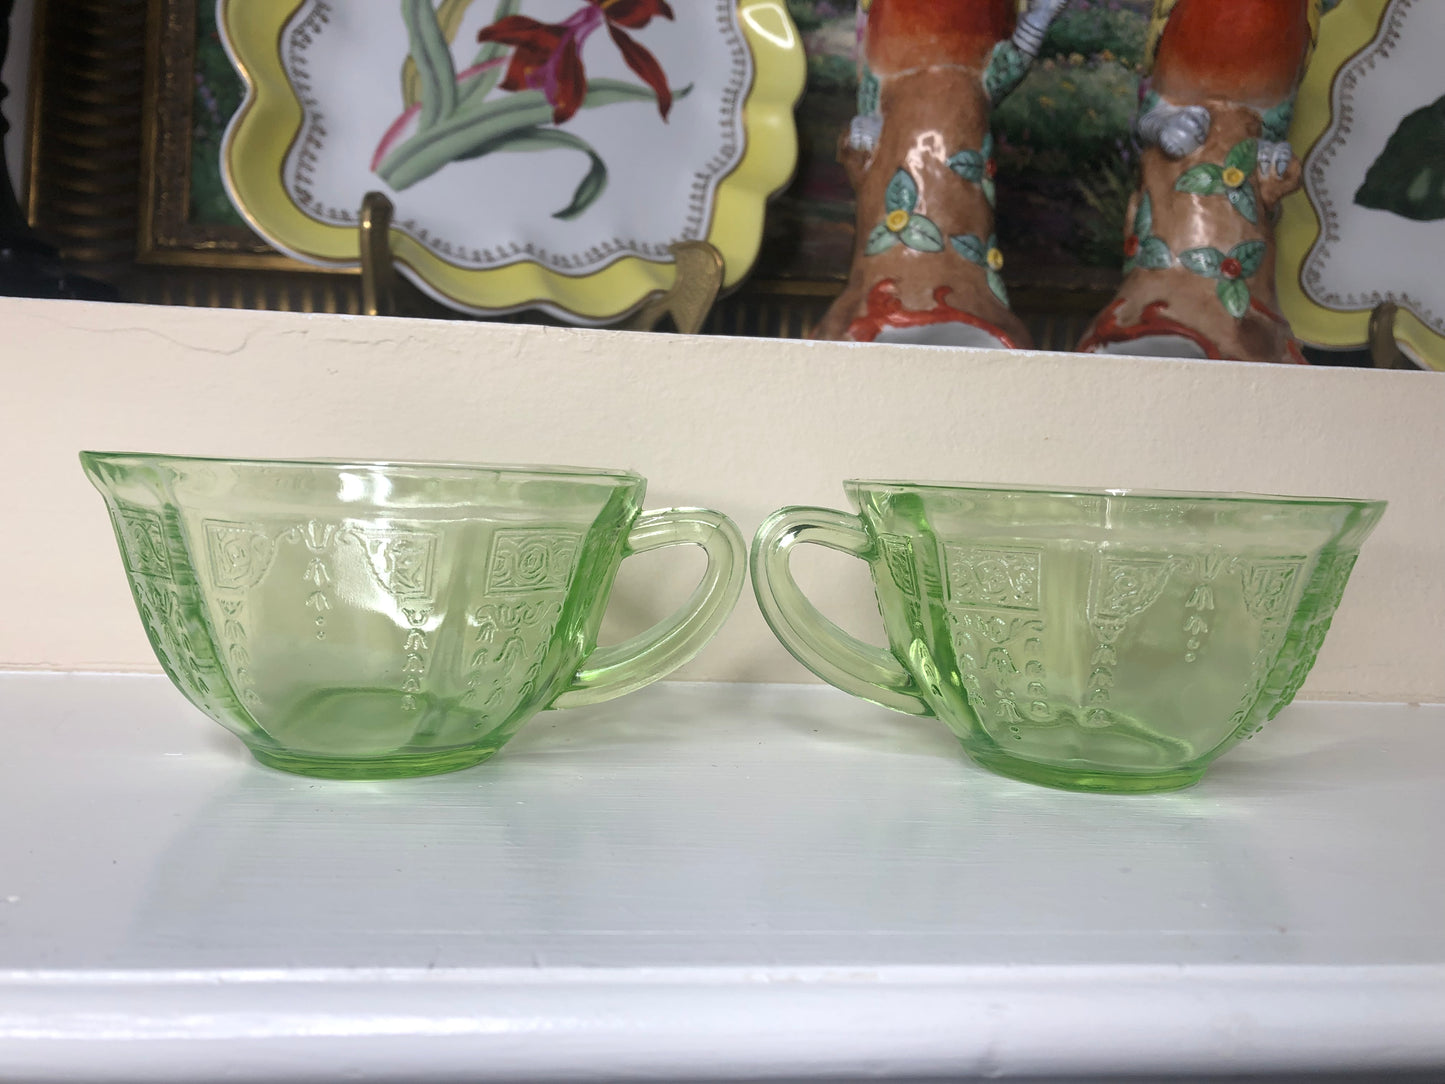 Vintage Green Depression Glass teacups pair (2) - Excellent condition!